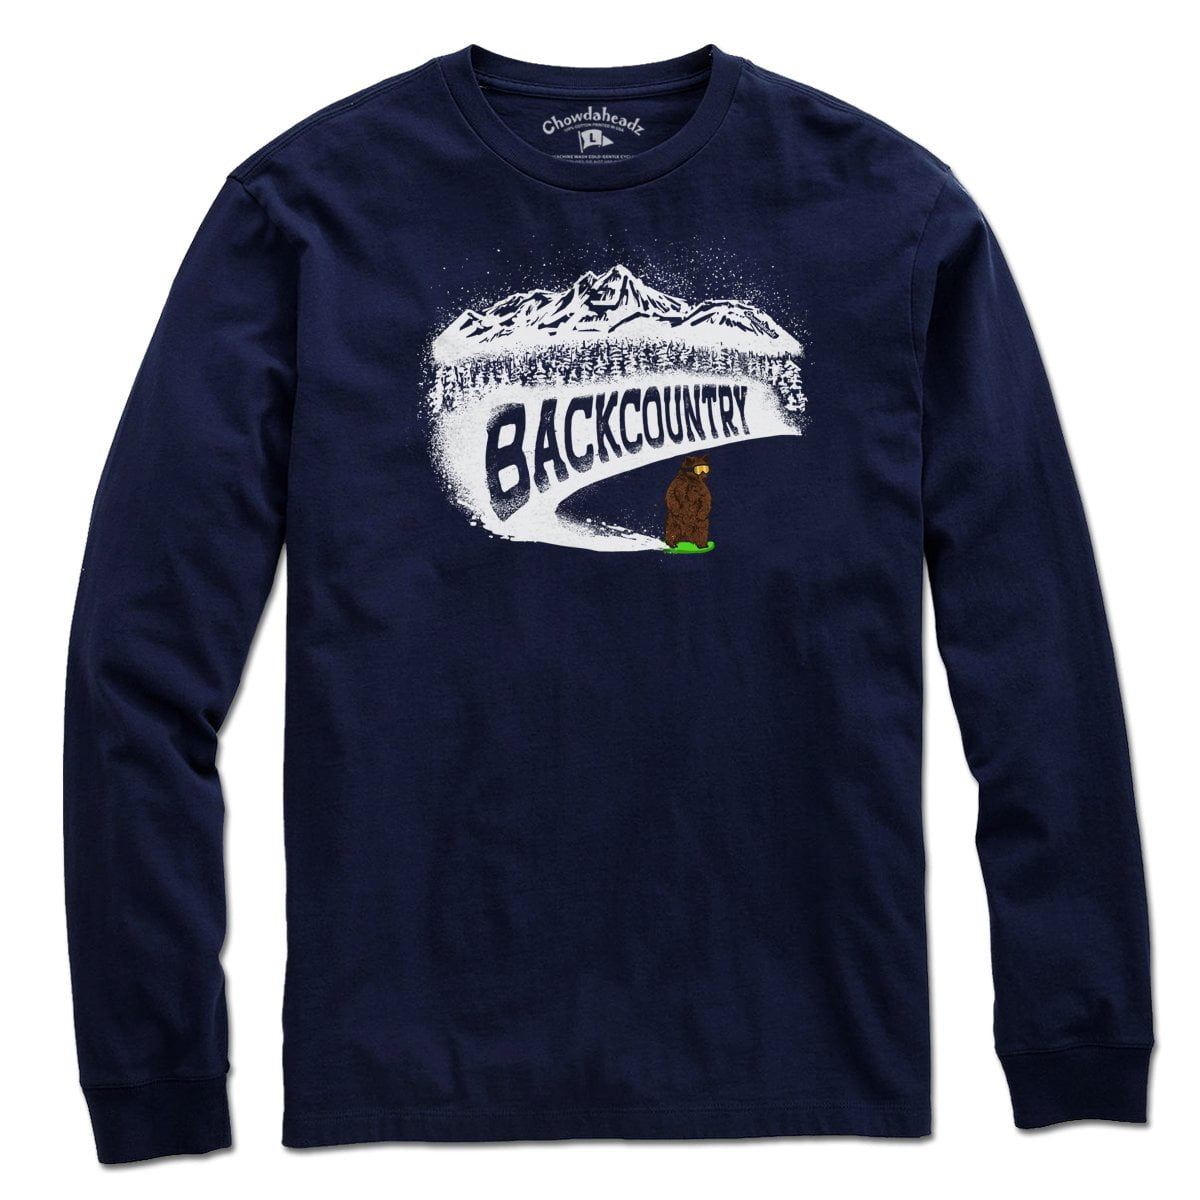 Backcountry T-Shirt - Chowdaheadz